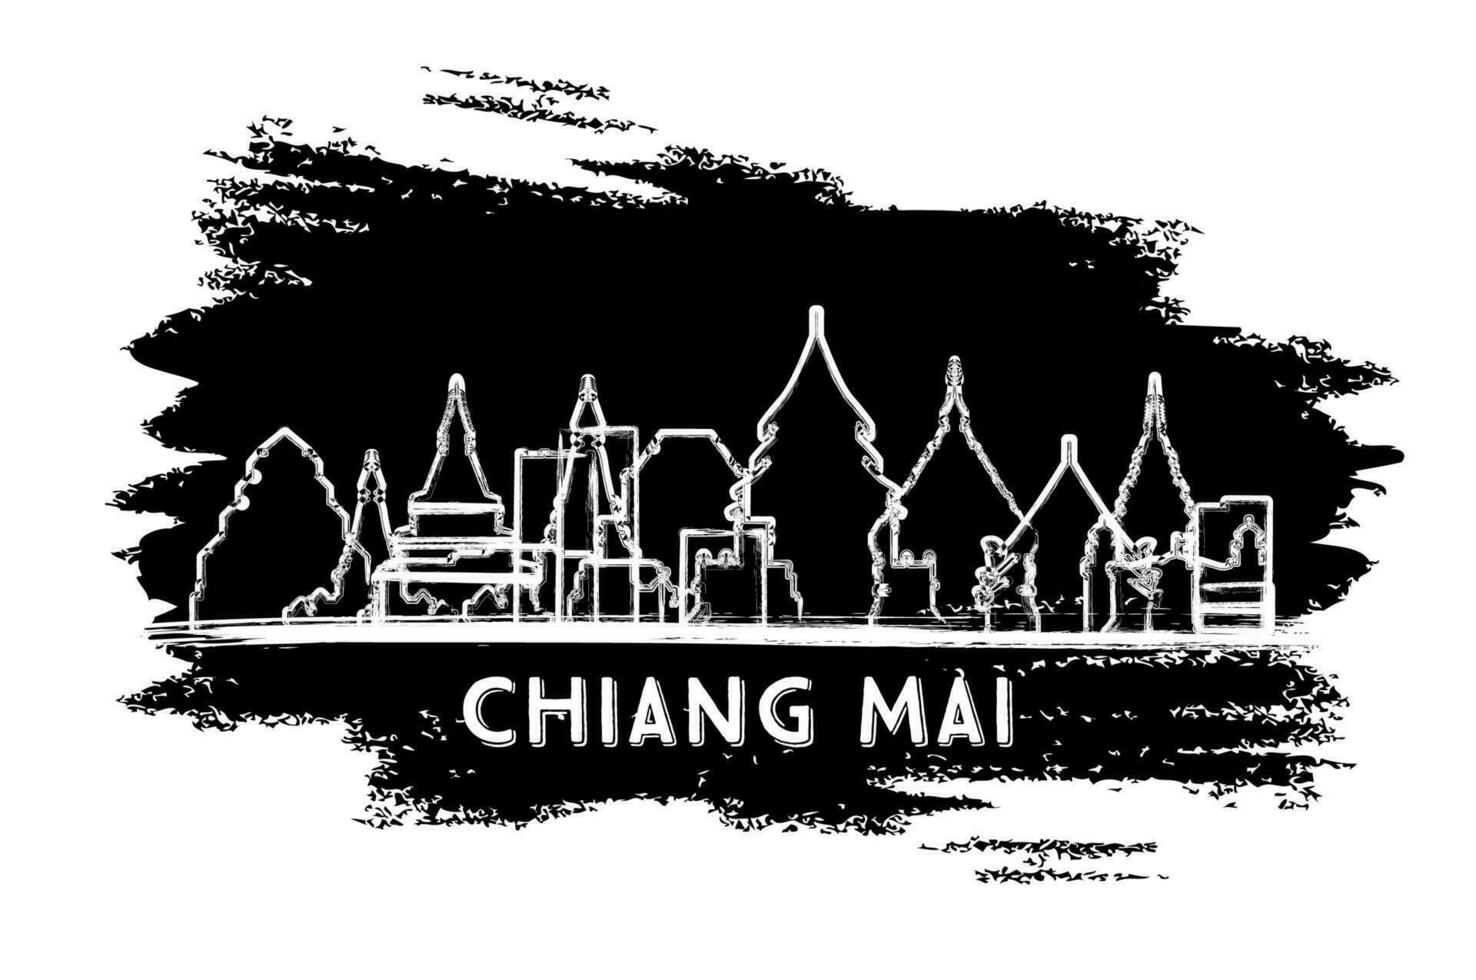 Chiang mai Thailand stad horizon silhouet. hand- getrokken schetsen. bedrijf reizen en toerisme concept met modern architectuur. Chiang mai stadsgezicht met oriëntatiepunten. vector